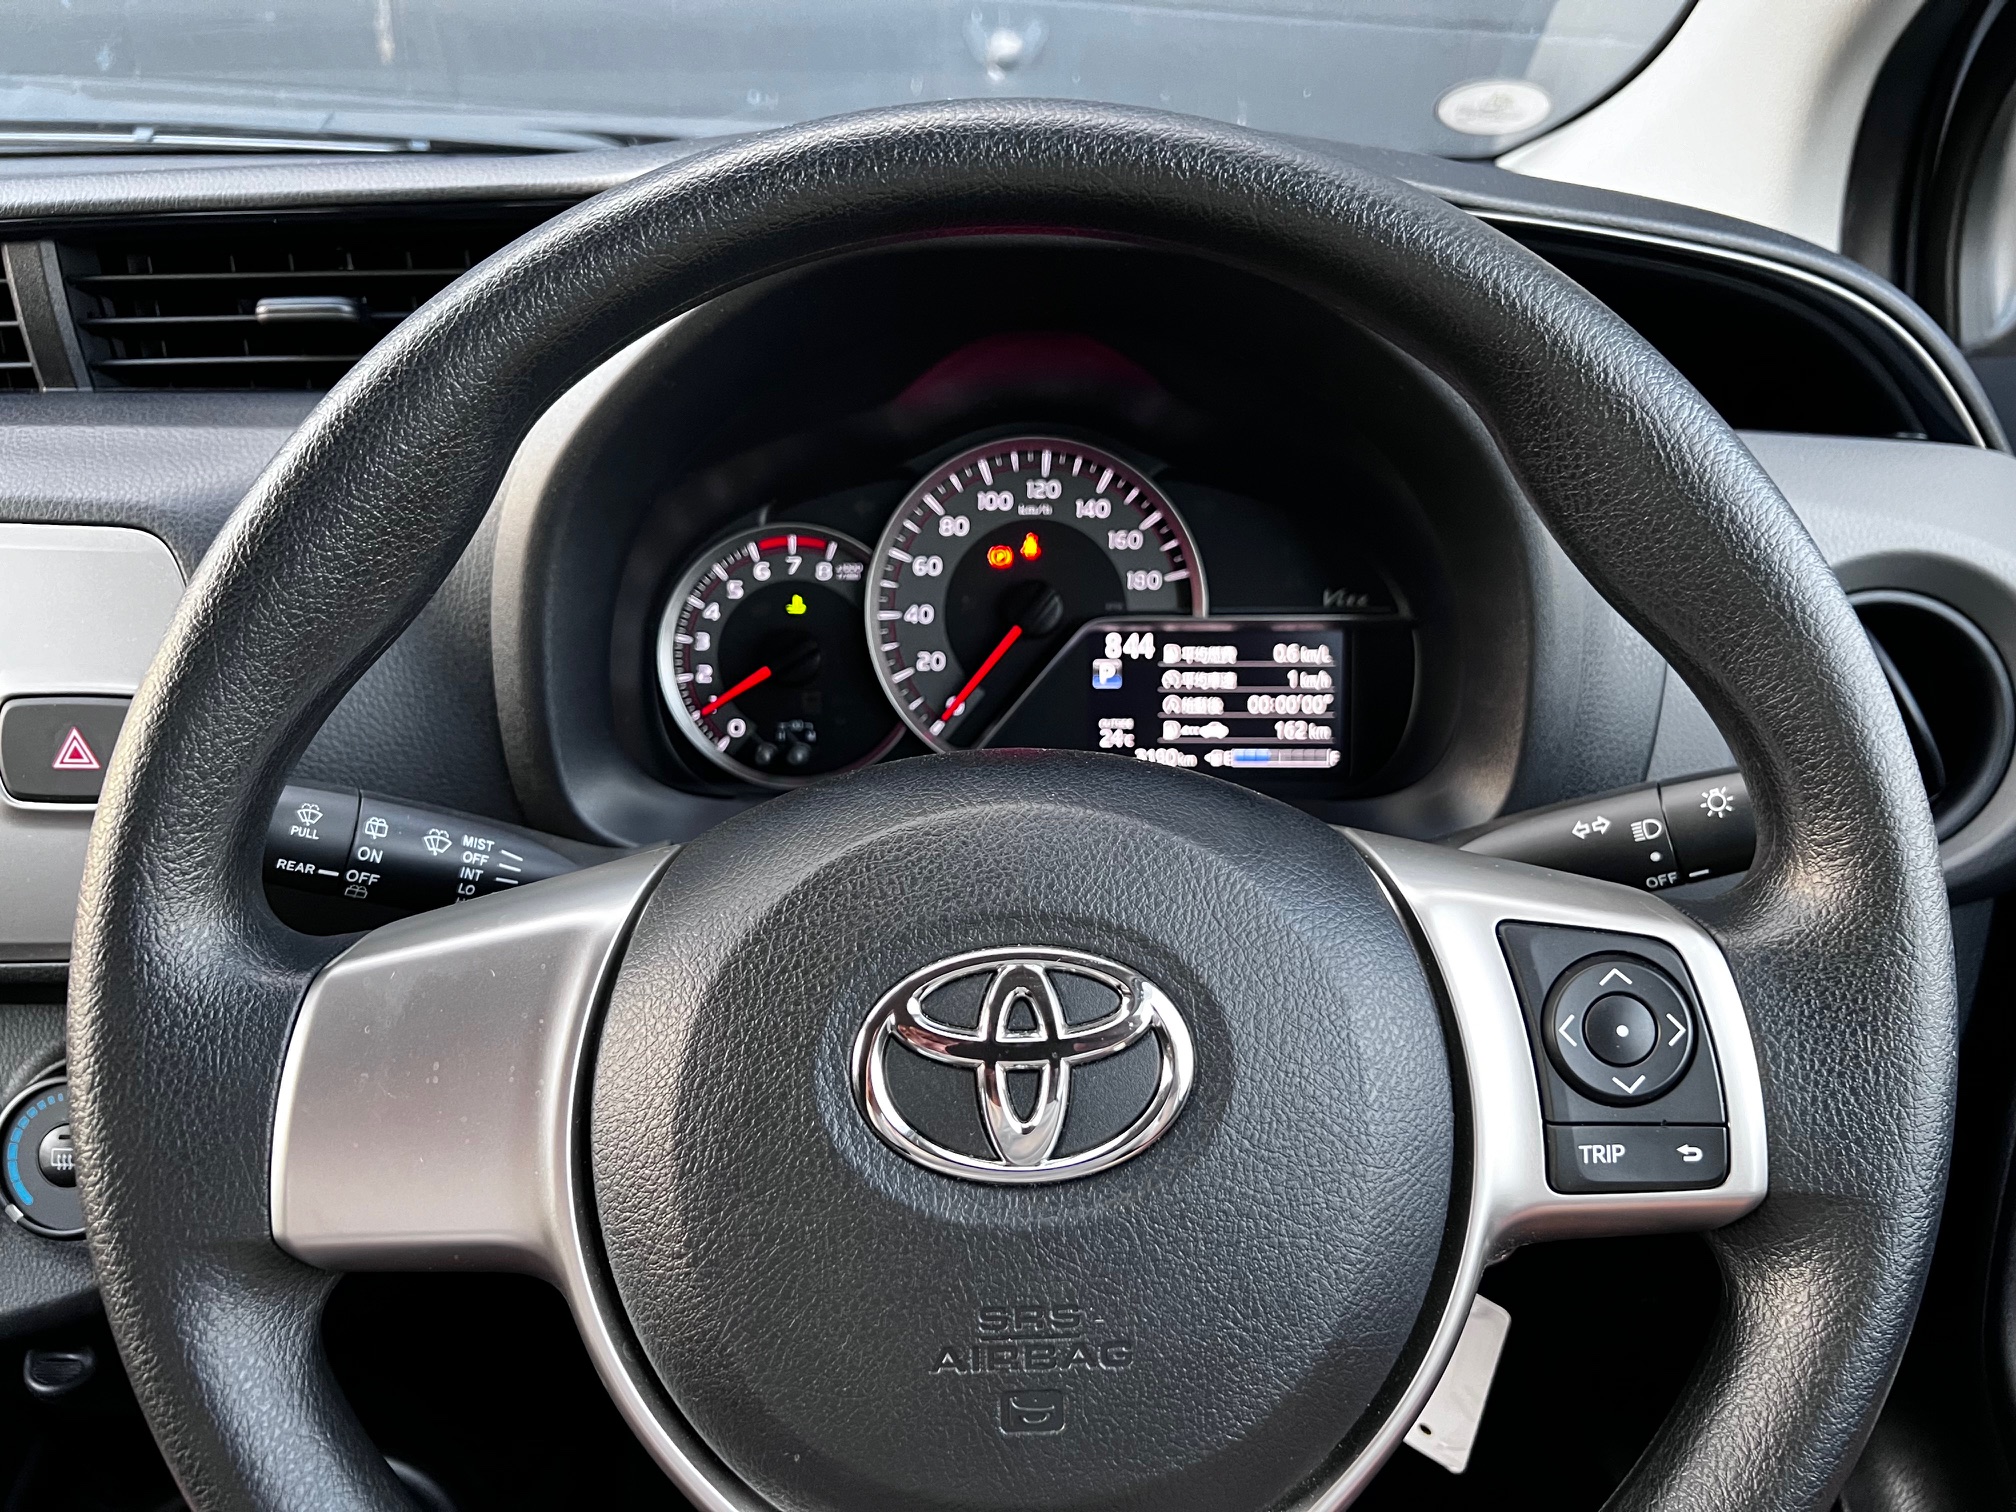 Toyota Vitz 2014 Image 14